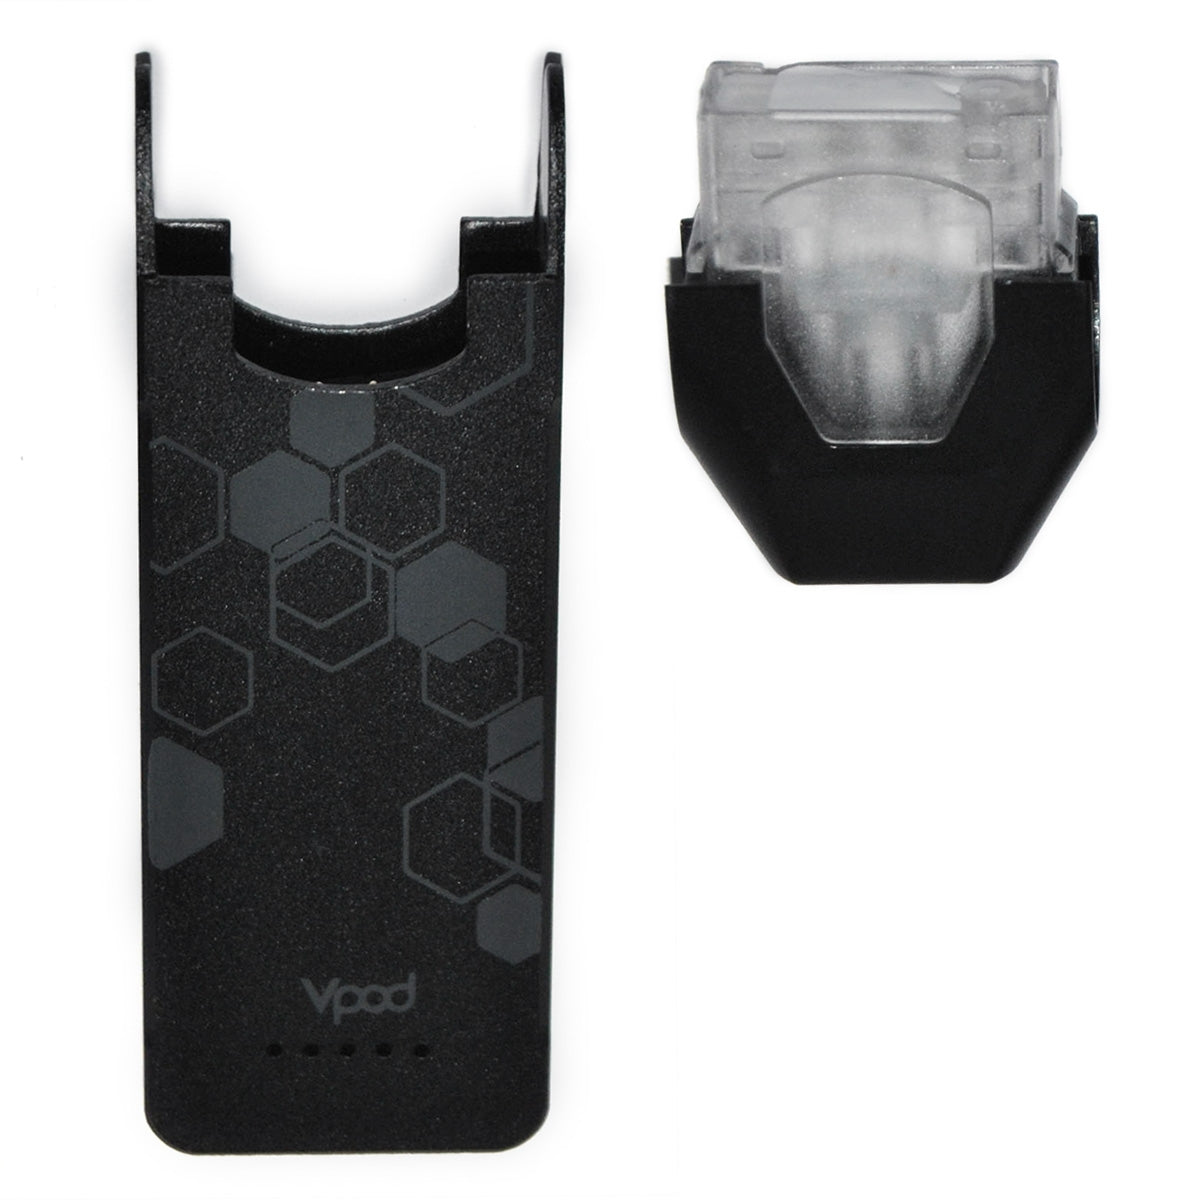 Vpod - POD Vaporizer Kit by HoneyStick